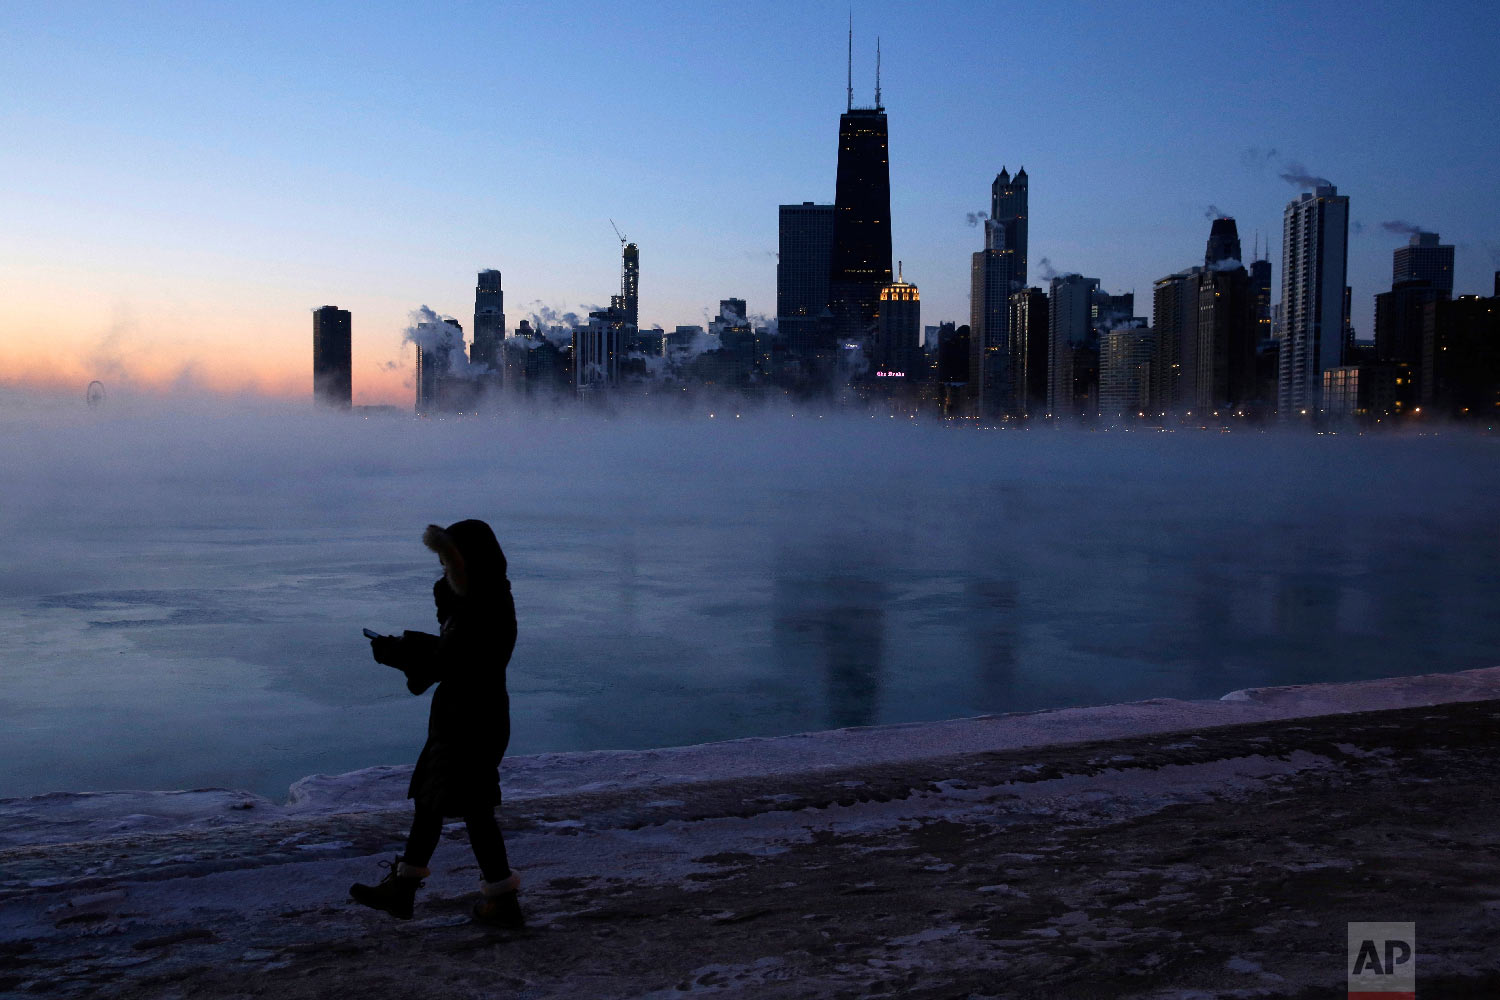  A person walks along the lakeshore, Wednesday, Jan. 30, 2019, in Chicago. (AP Photo/Kiichiro Sato) 